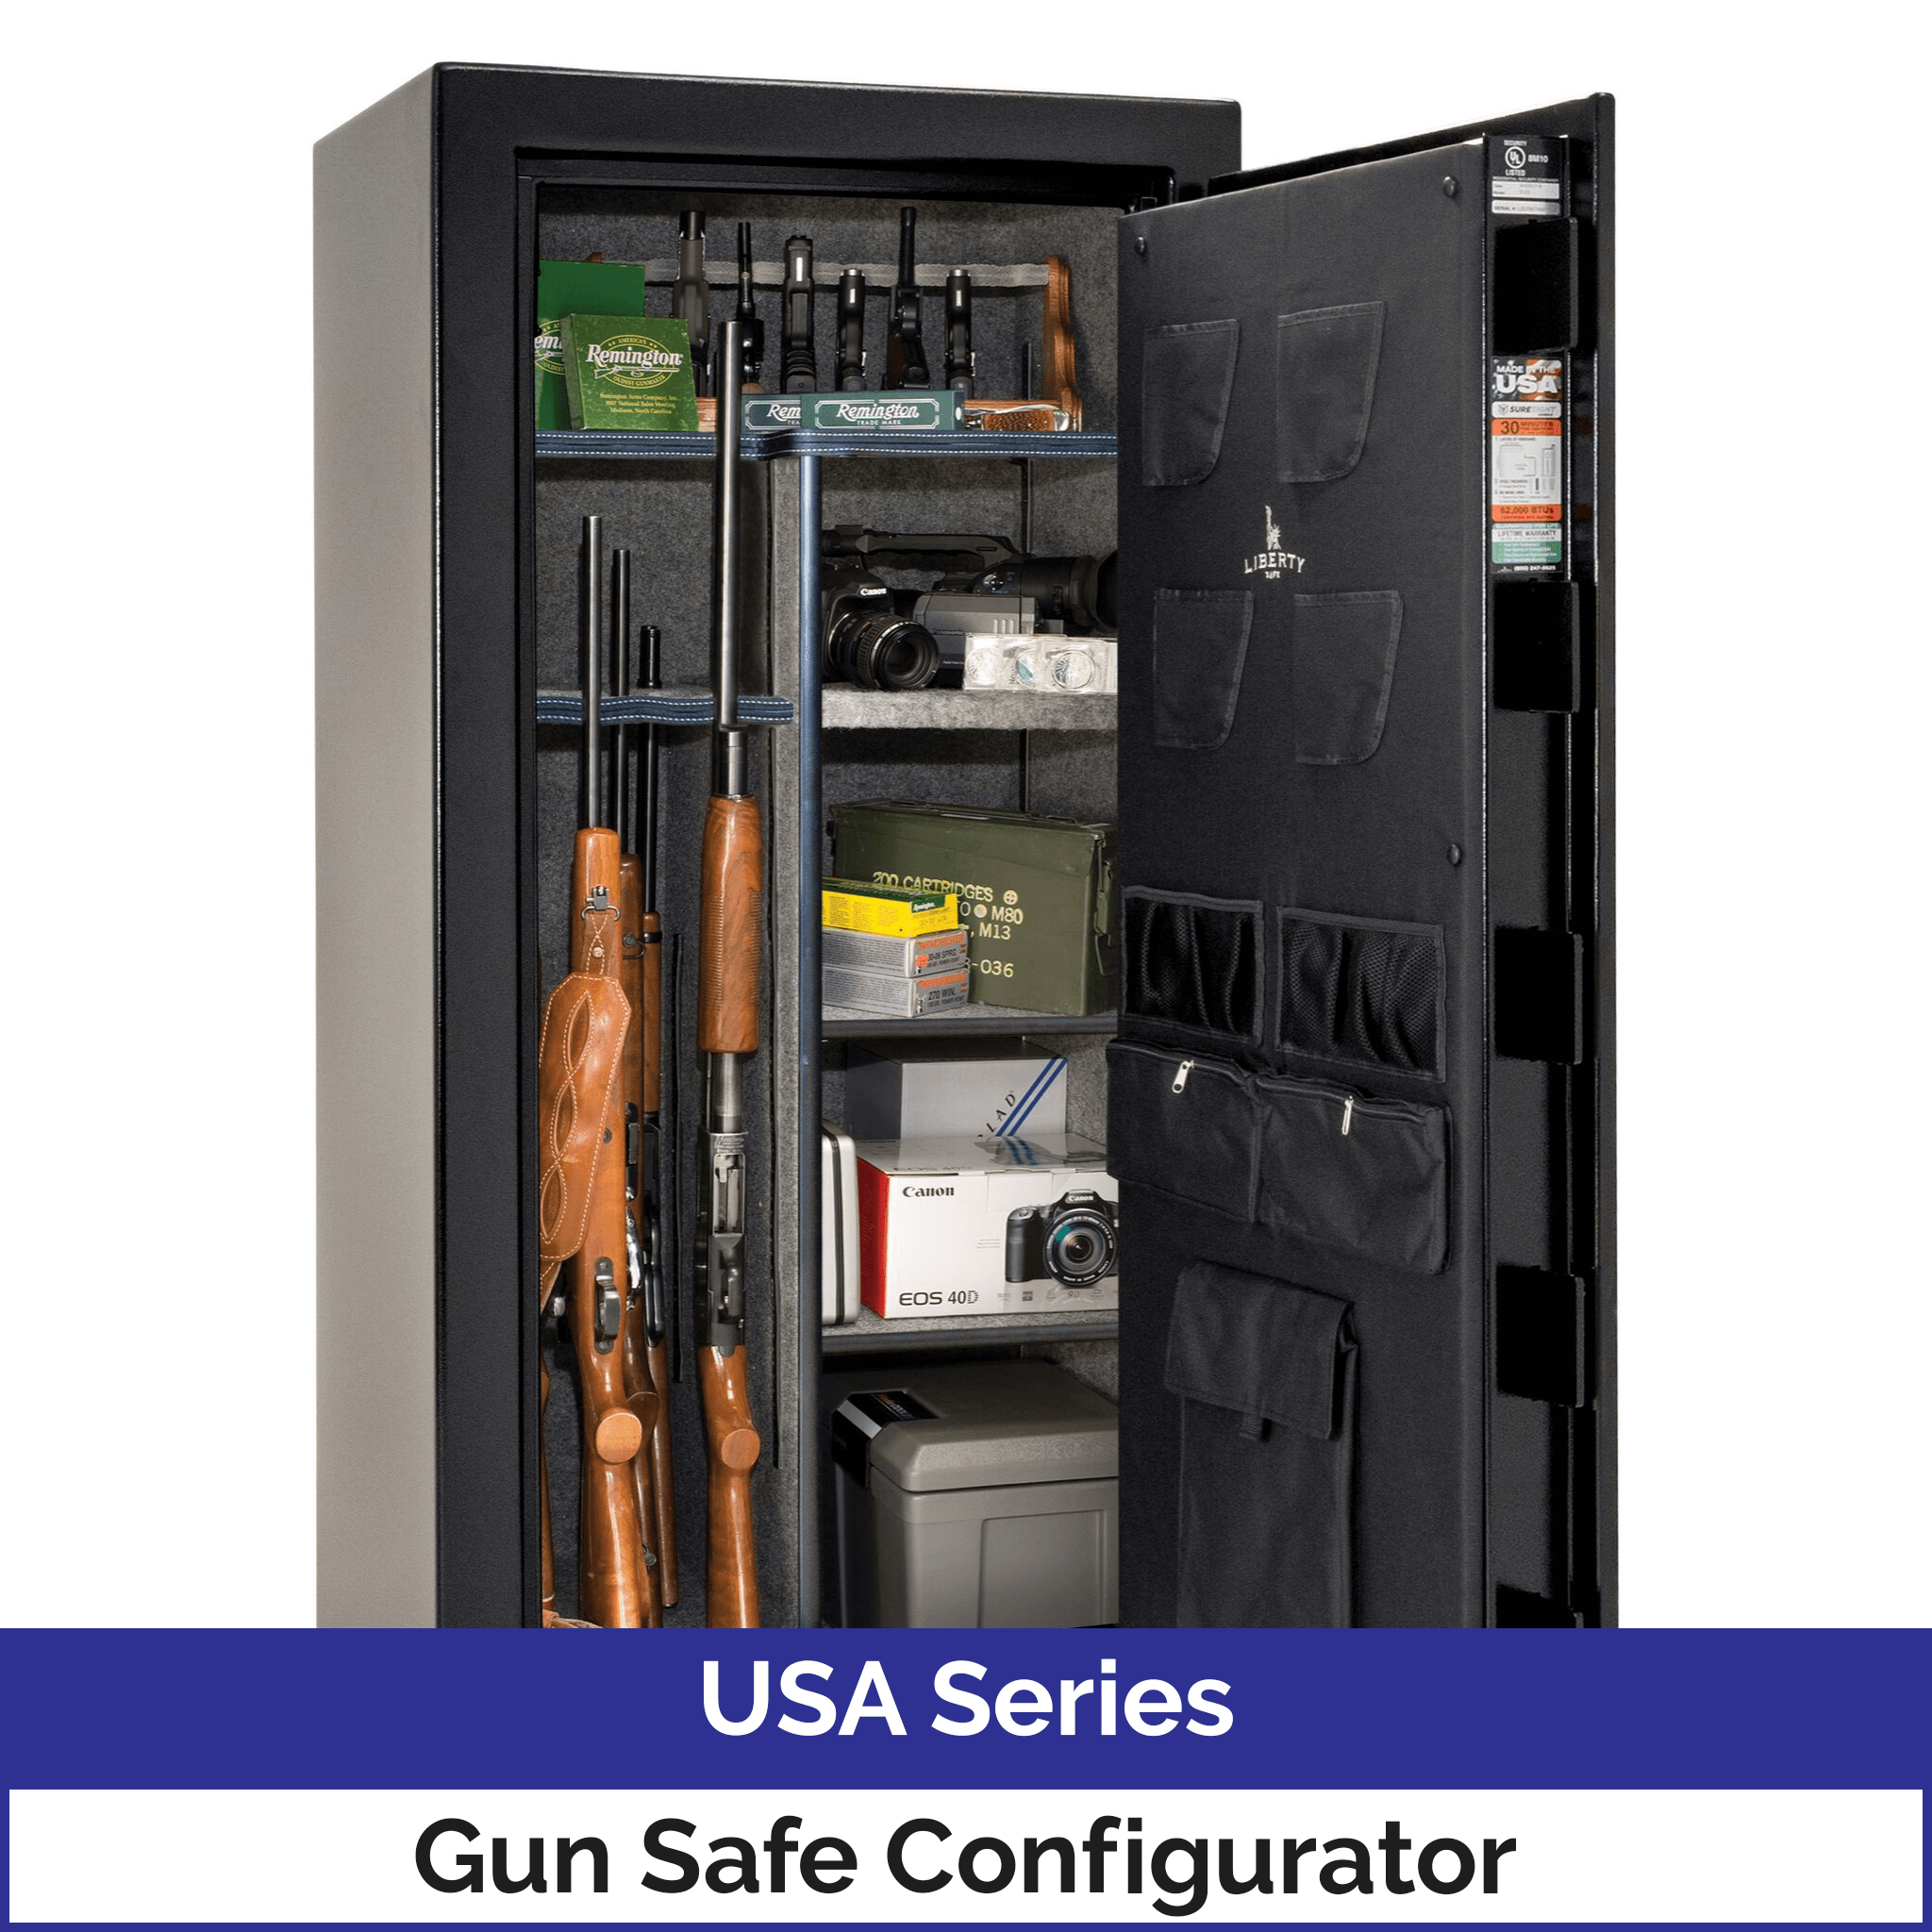 Liberty USA Series Gun Safe Configurator, photo 2